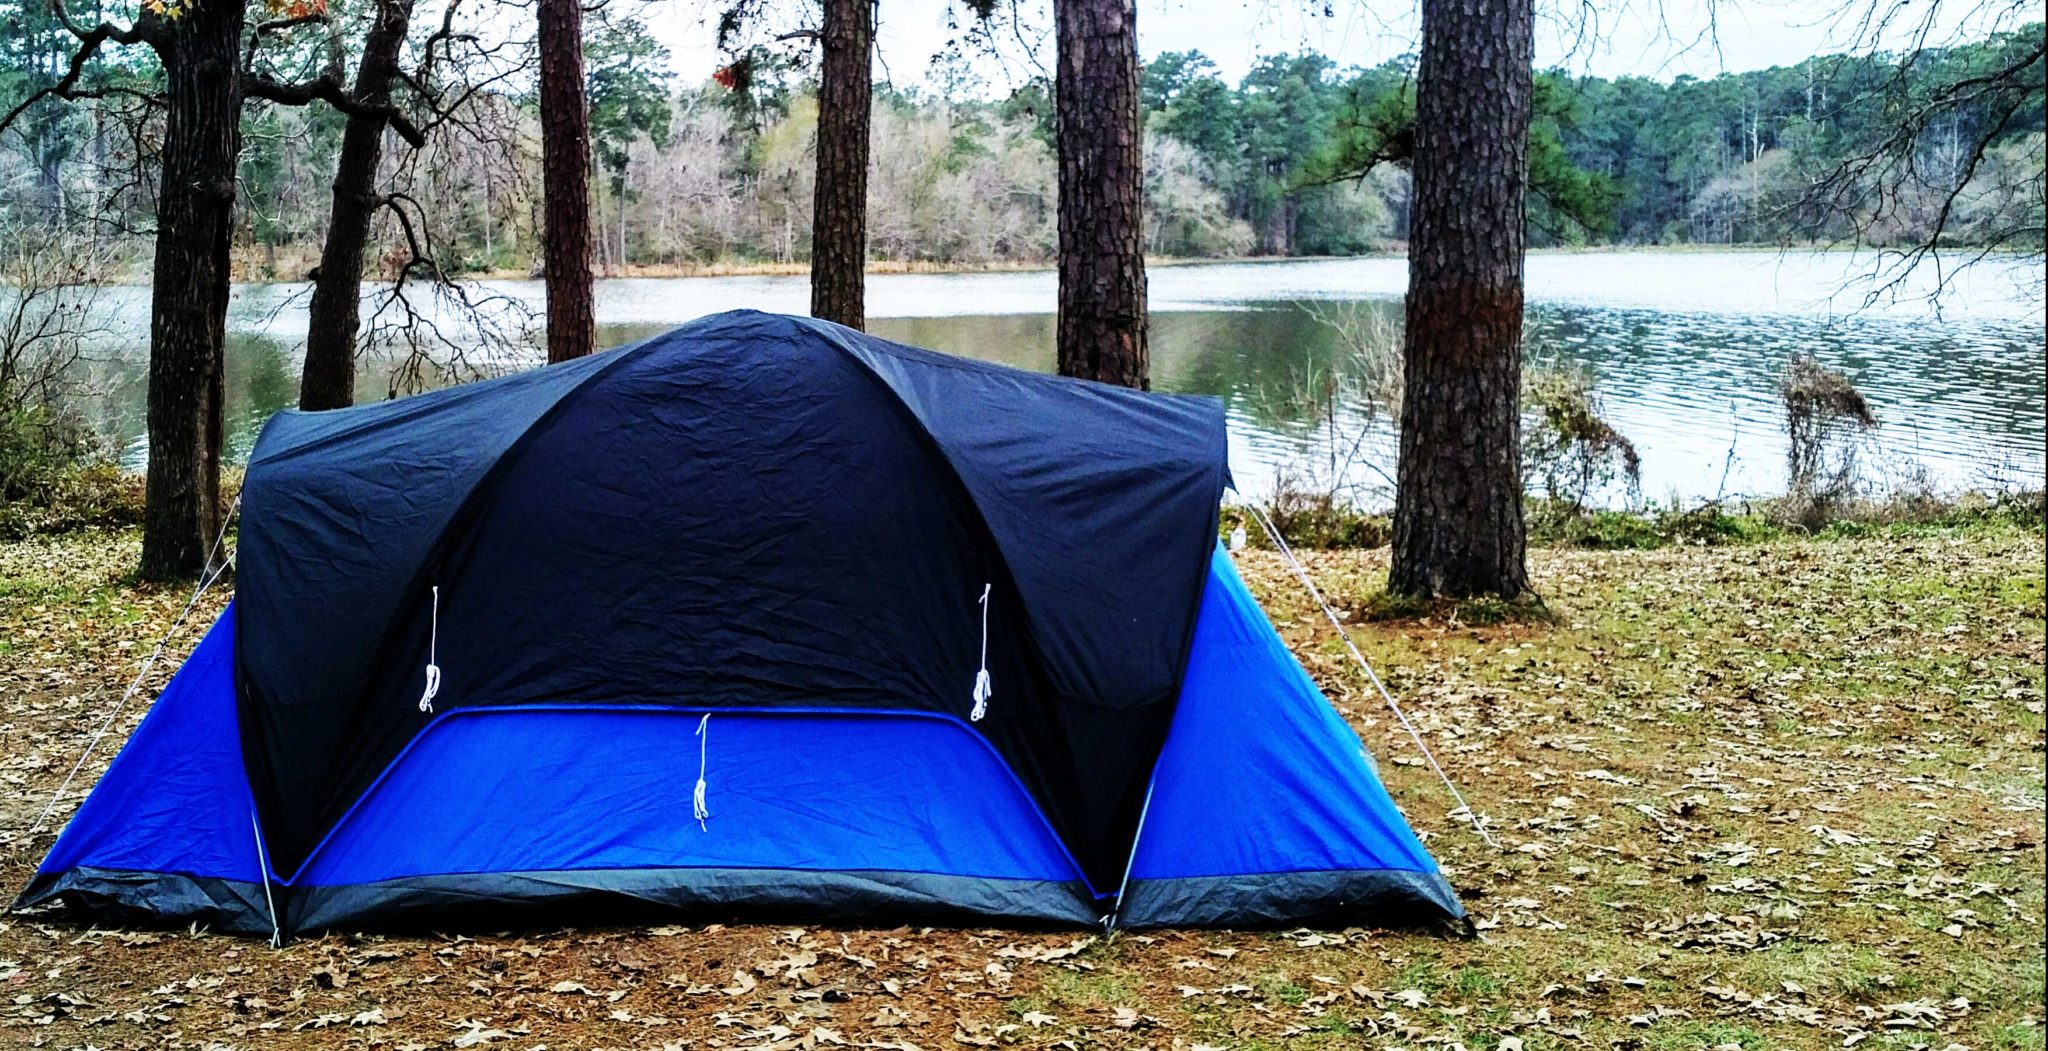 Camping at Huntsville St Park